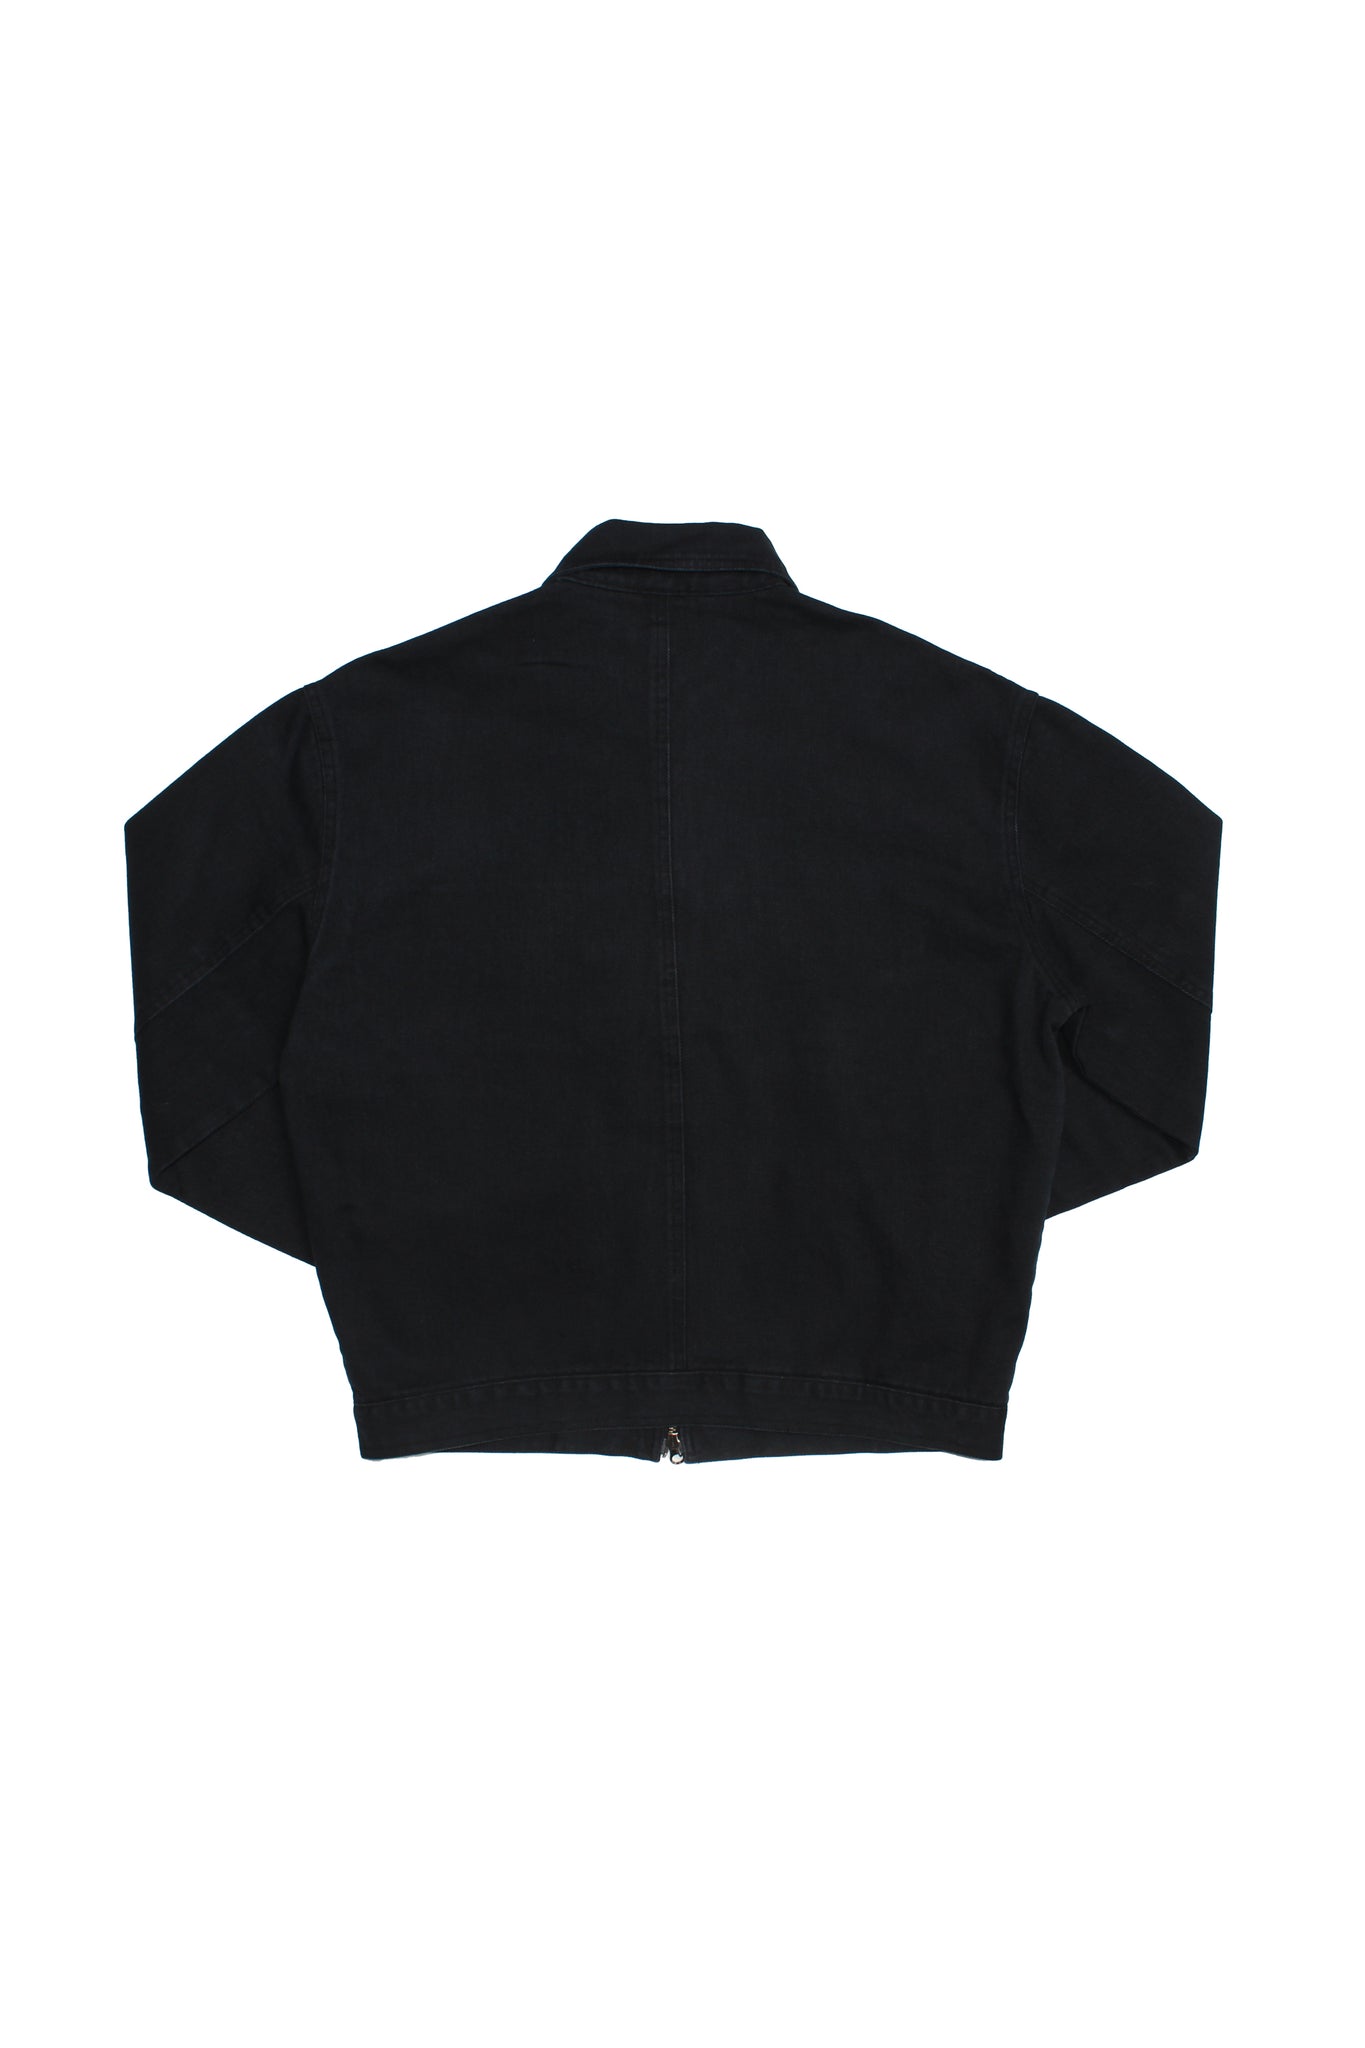 Kation Cotton Jacket in Black